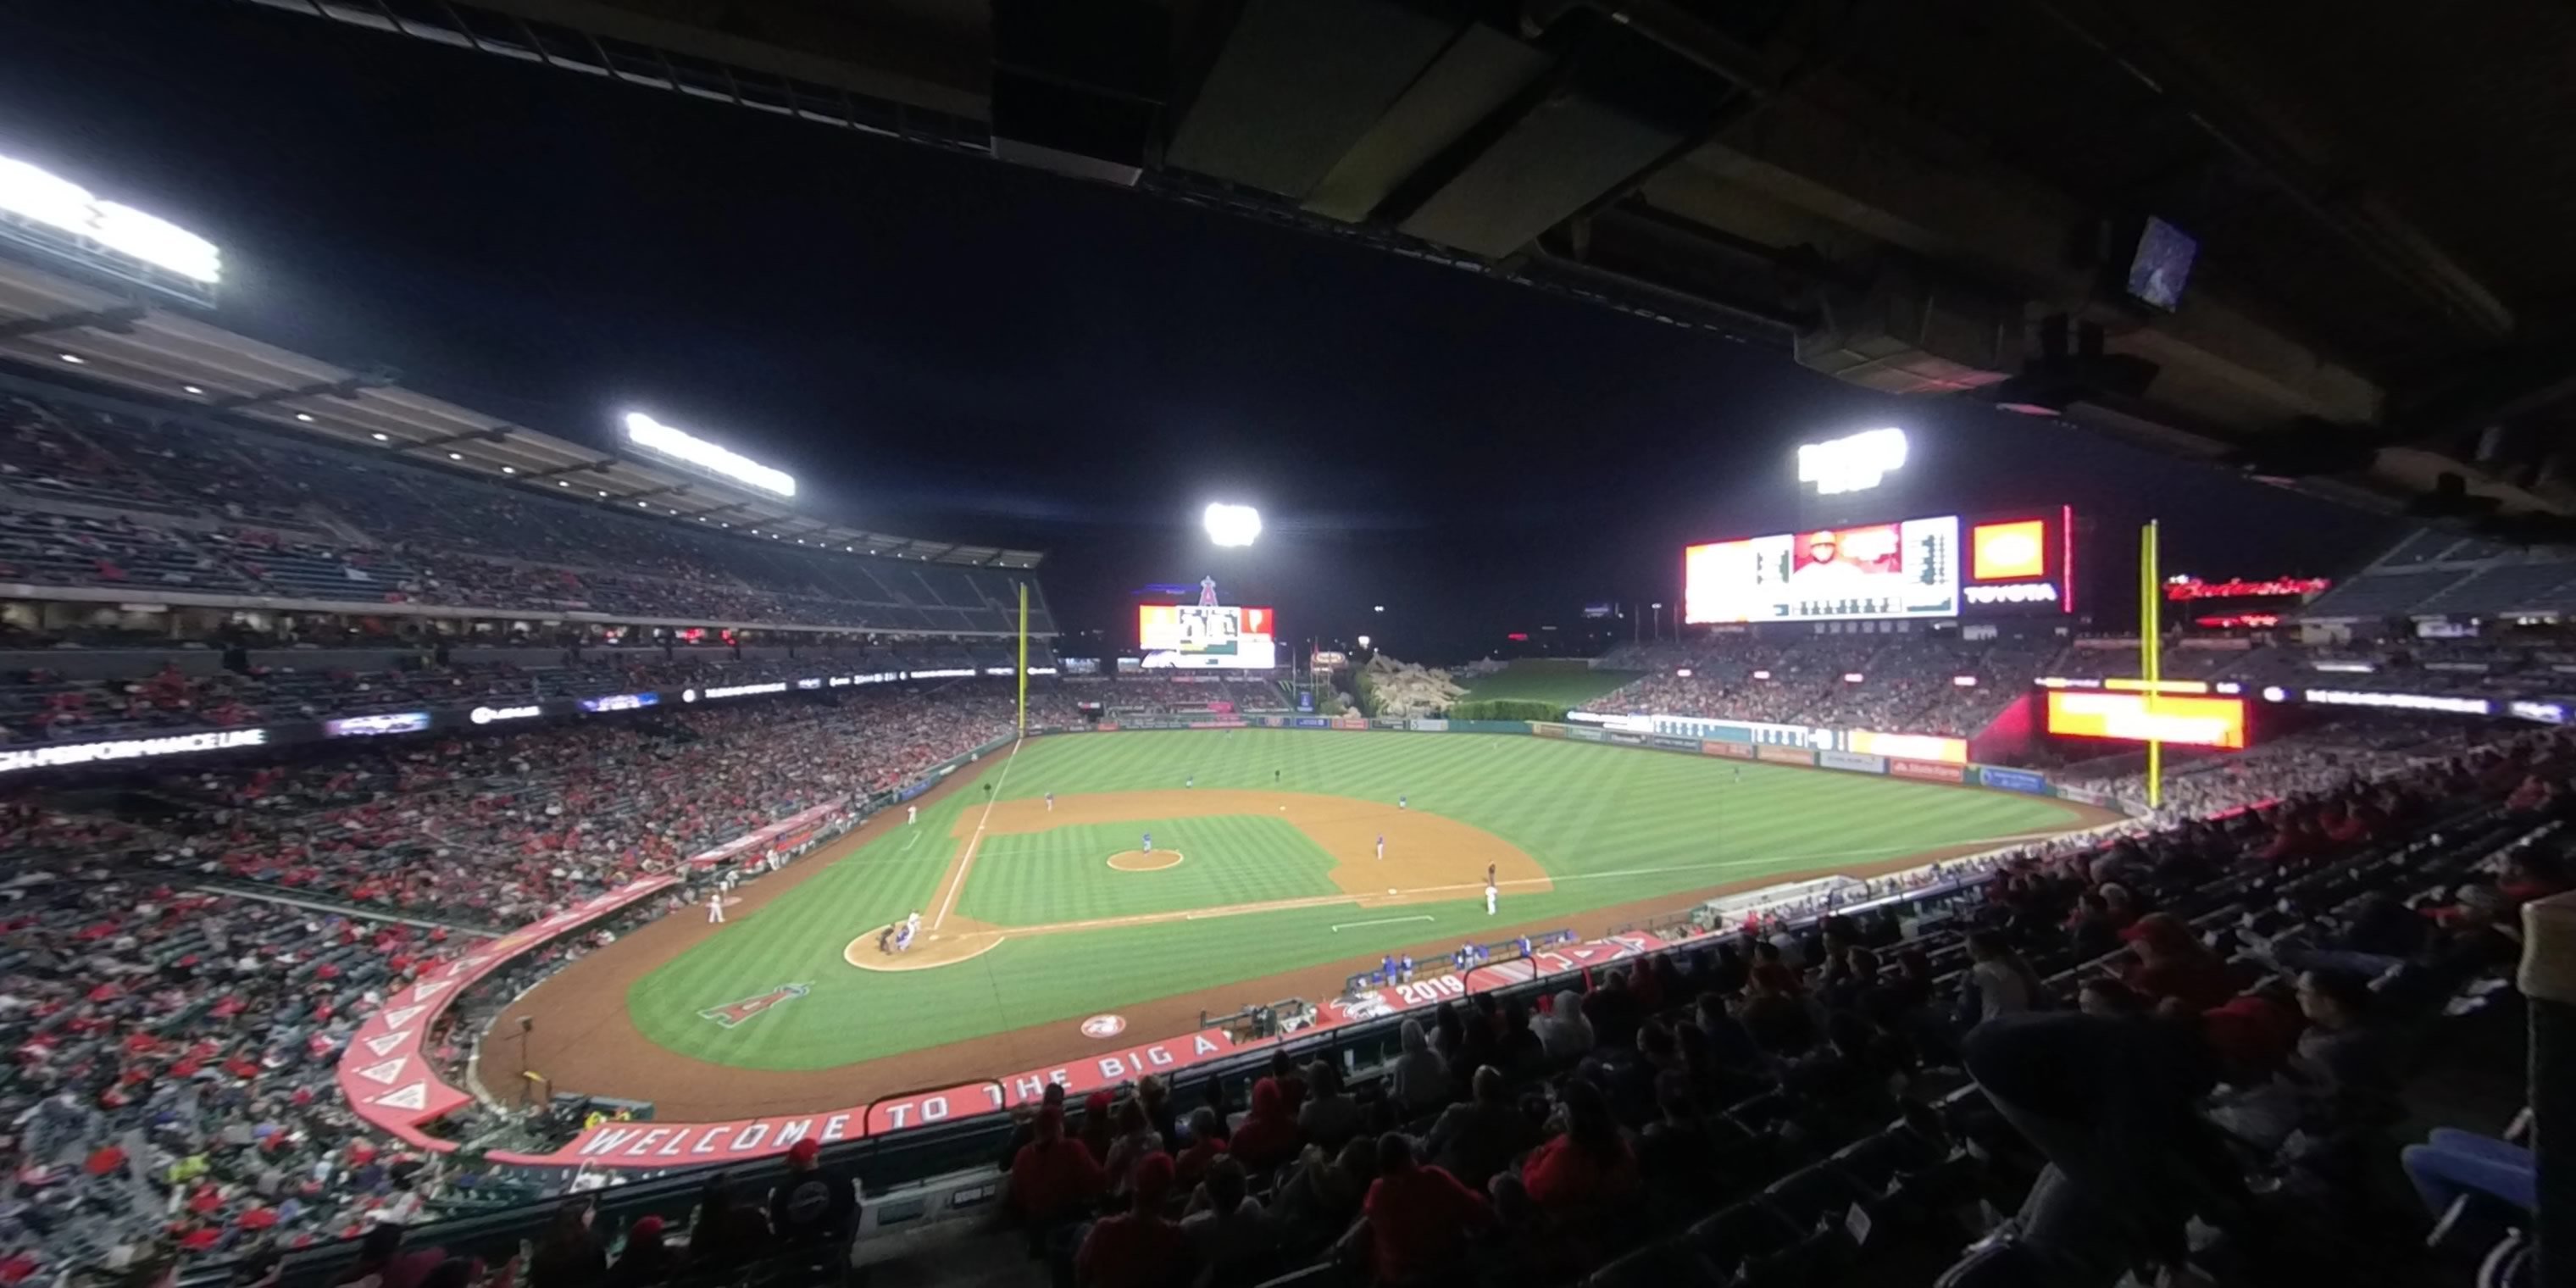 section 331 panoramic seat view  - angel stadium